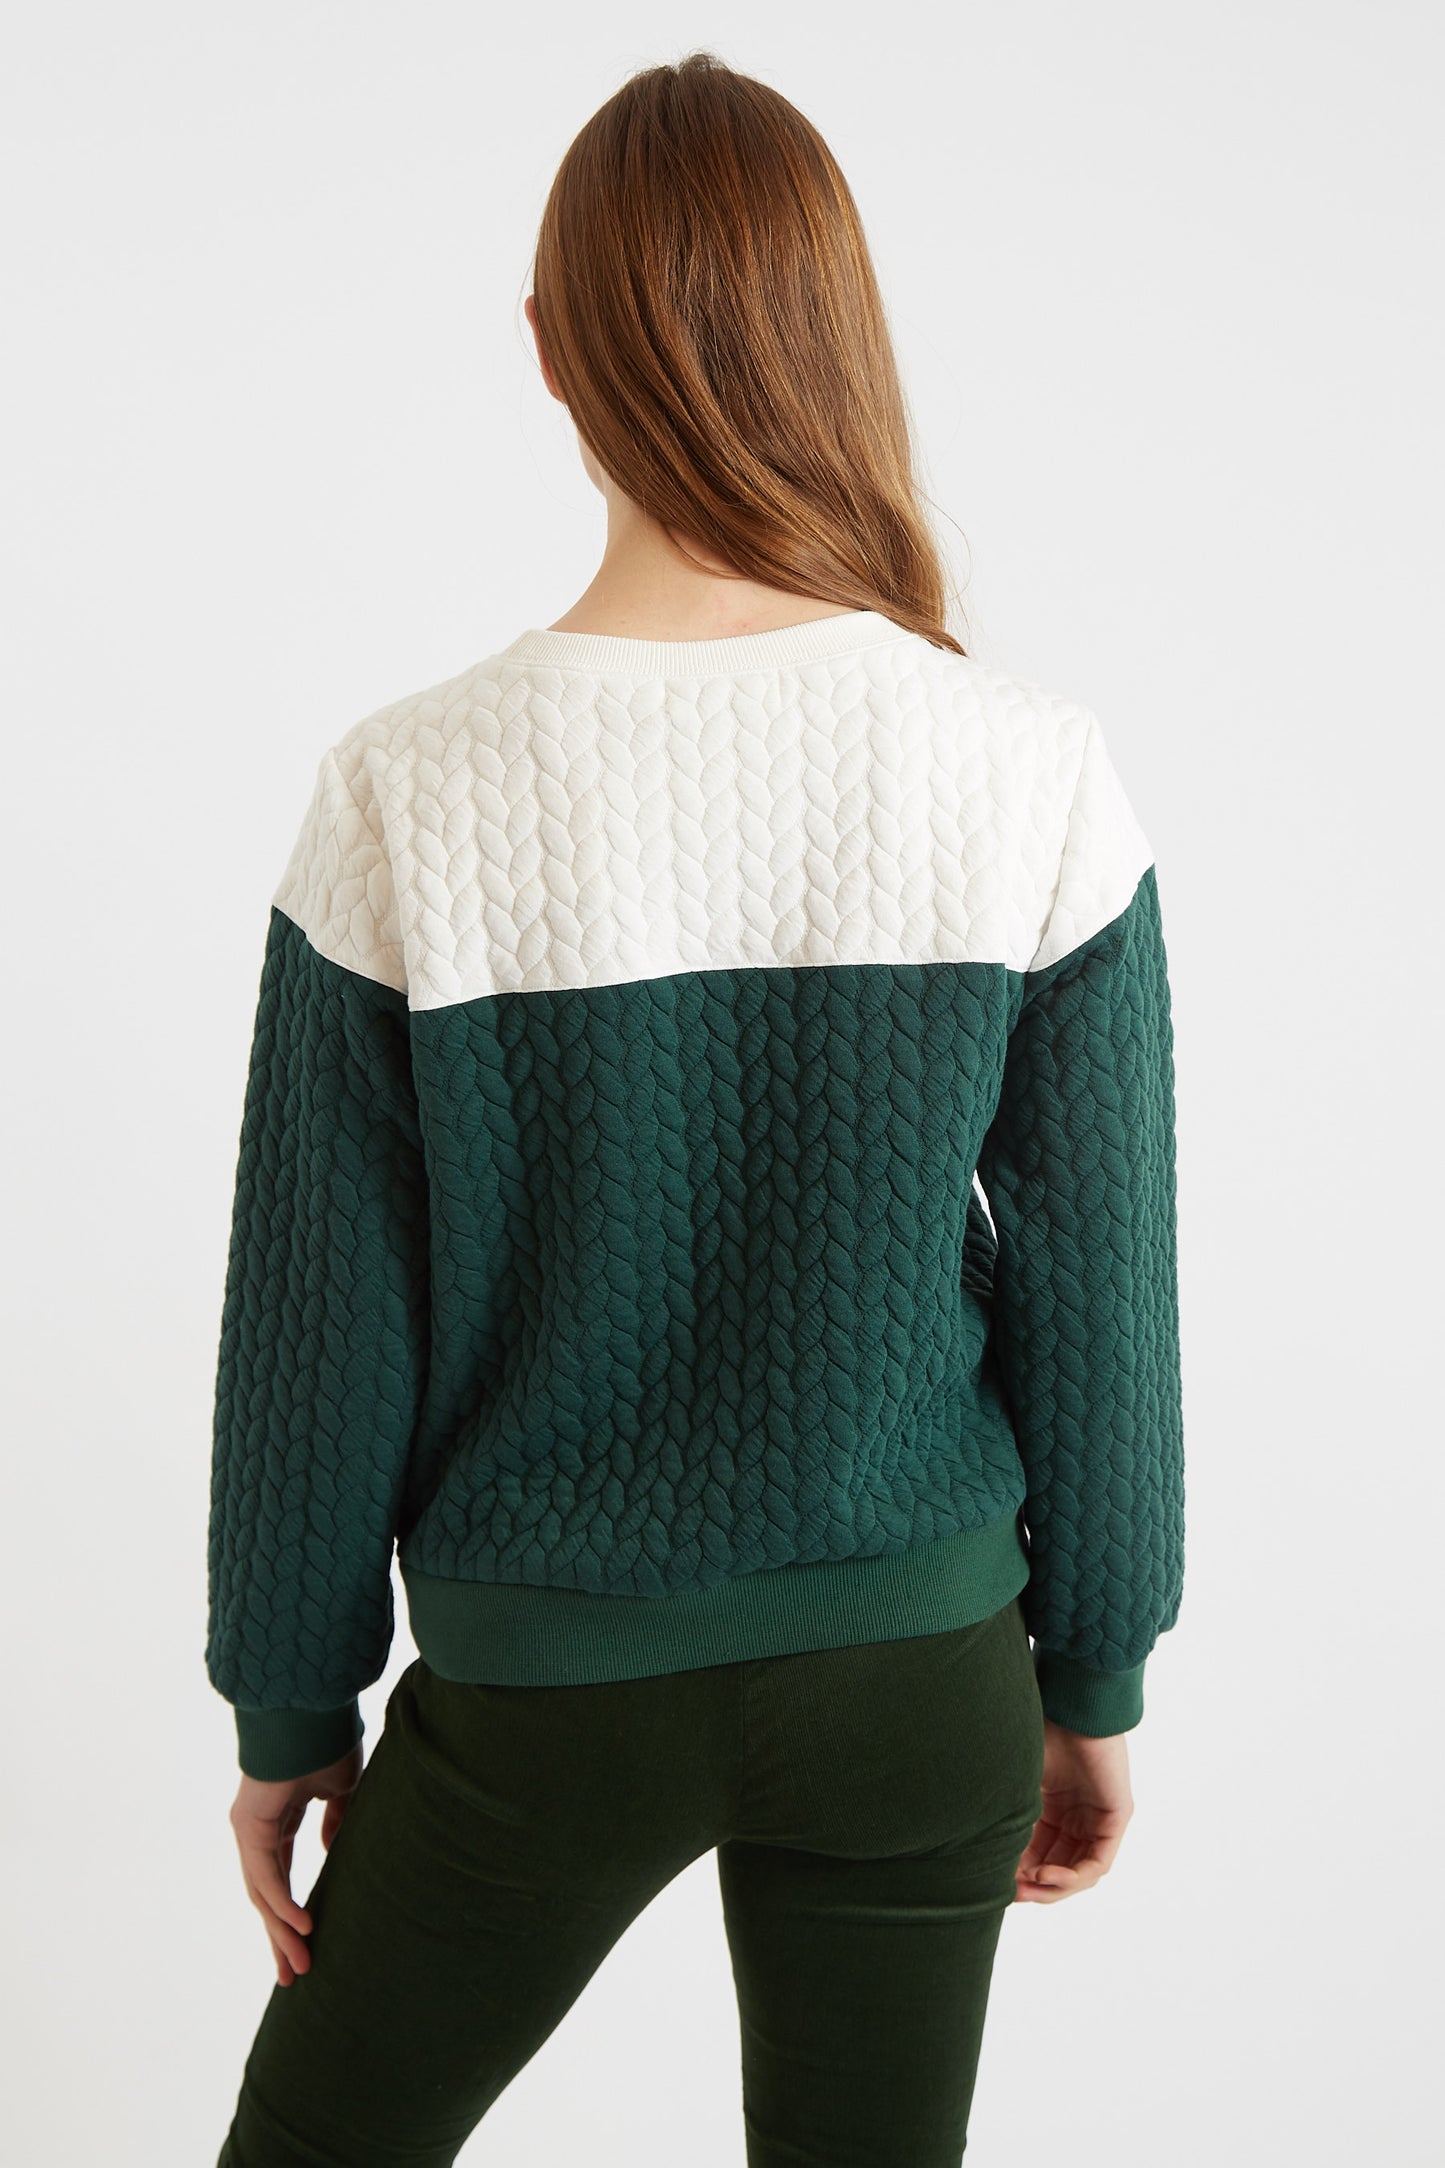 Jan 2 Colour Sweatshirt - Green and White